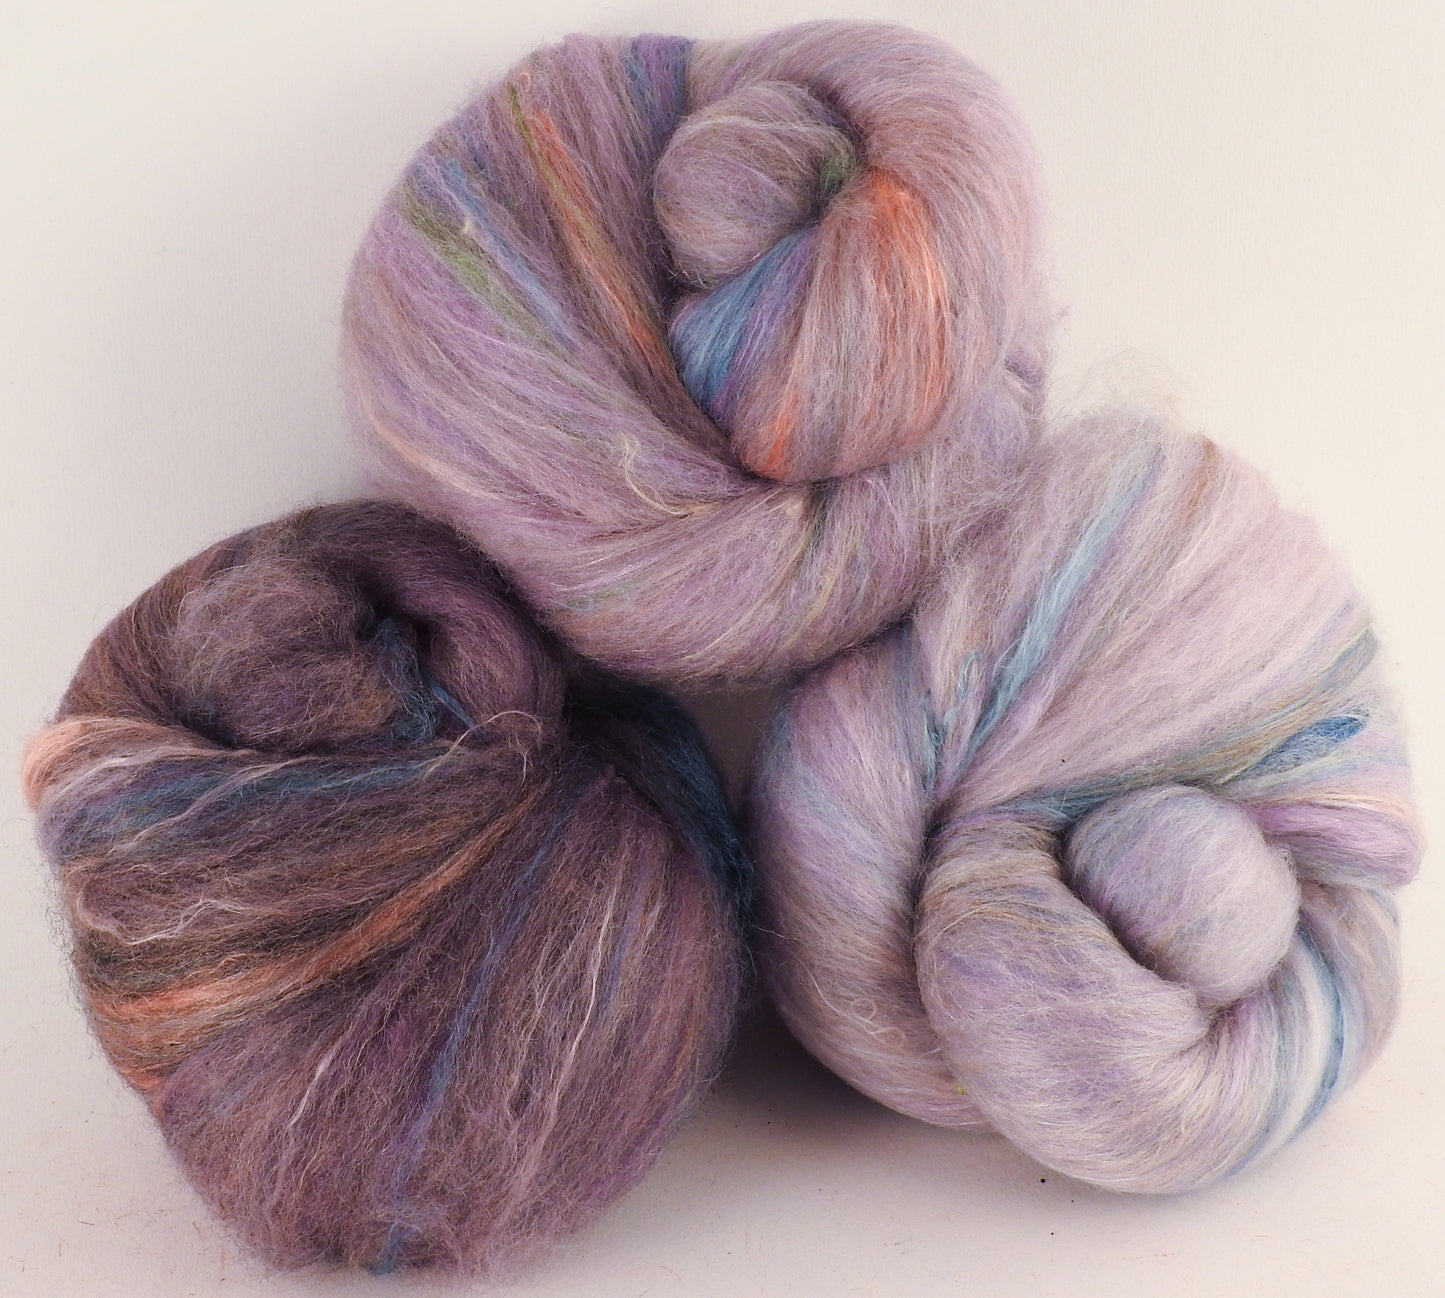 Natural Dyed Fiber Batts -Purple Heart's-ease - 80% wool, 20% silk - 3.4 oz. - Inglenook Fibers